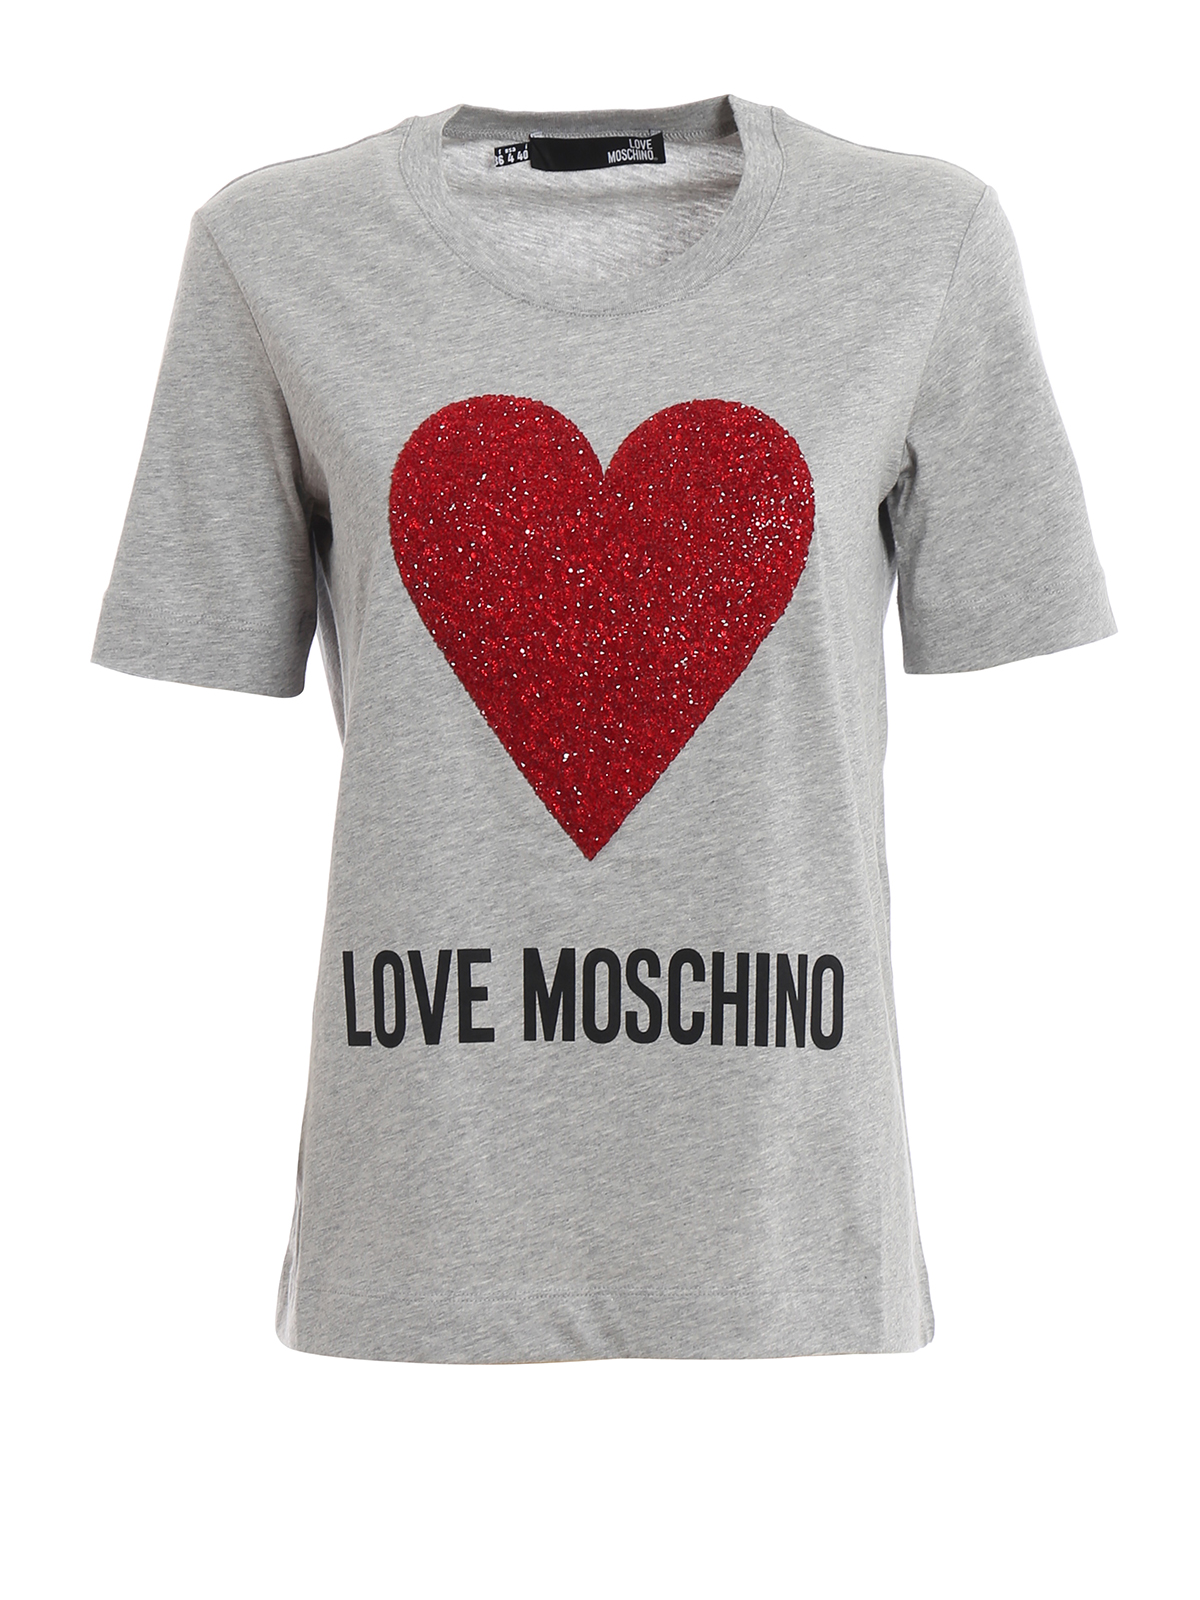 Tシャツ Love Moschino - Tシャツ - ライトグレー - W4F151GM3517A688